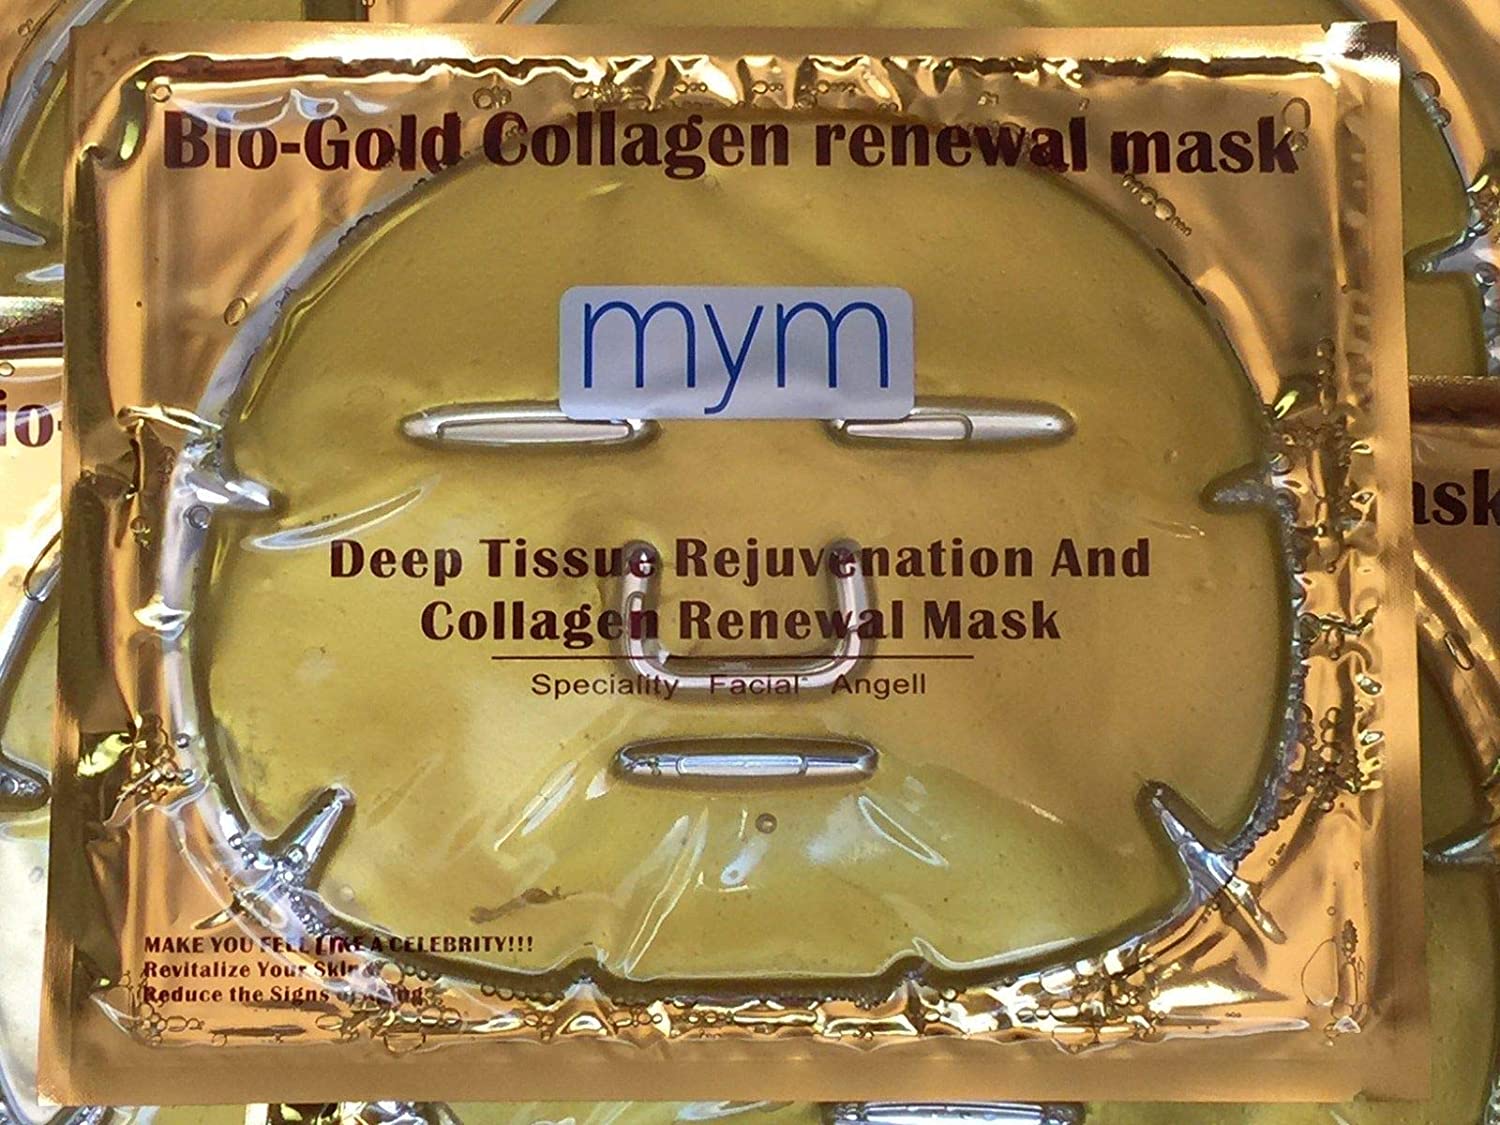 Bio-Gold 24k Gold Collagen Renewal Mask for Deep Tissue Rejuvenation and Collagen Renewal X 10 Pcs